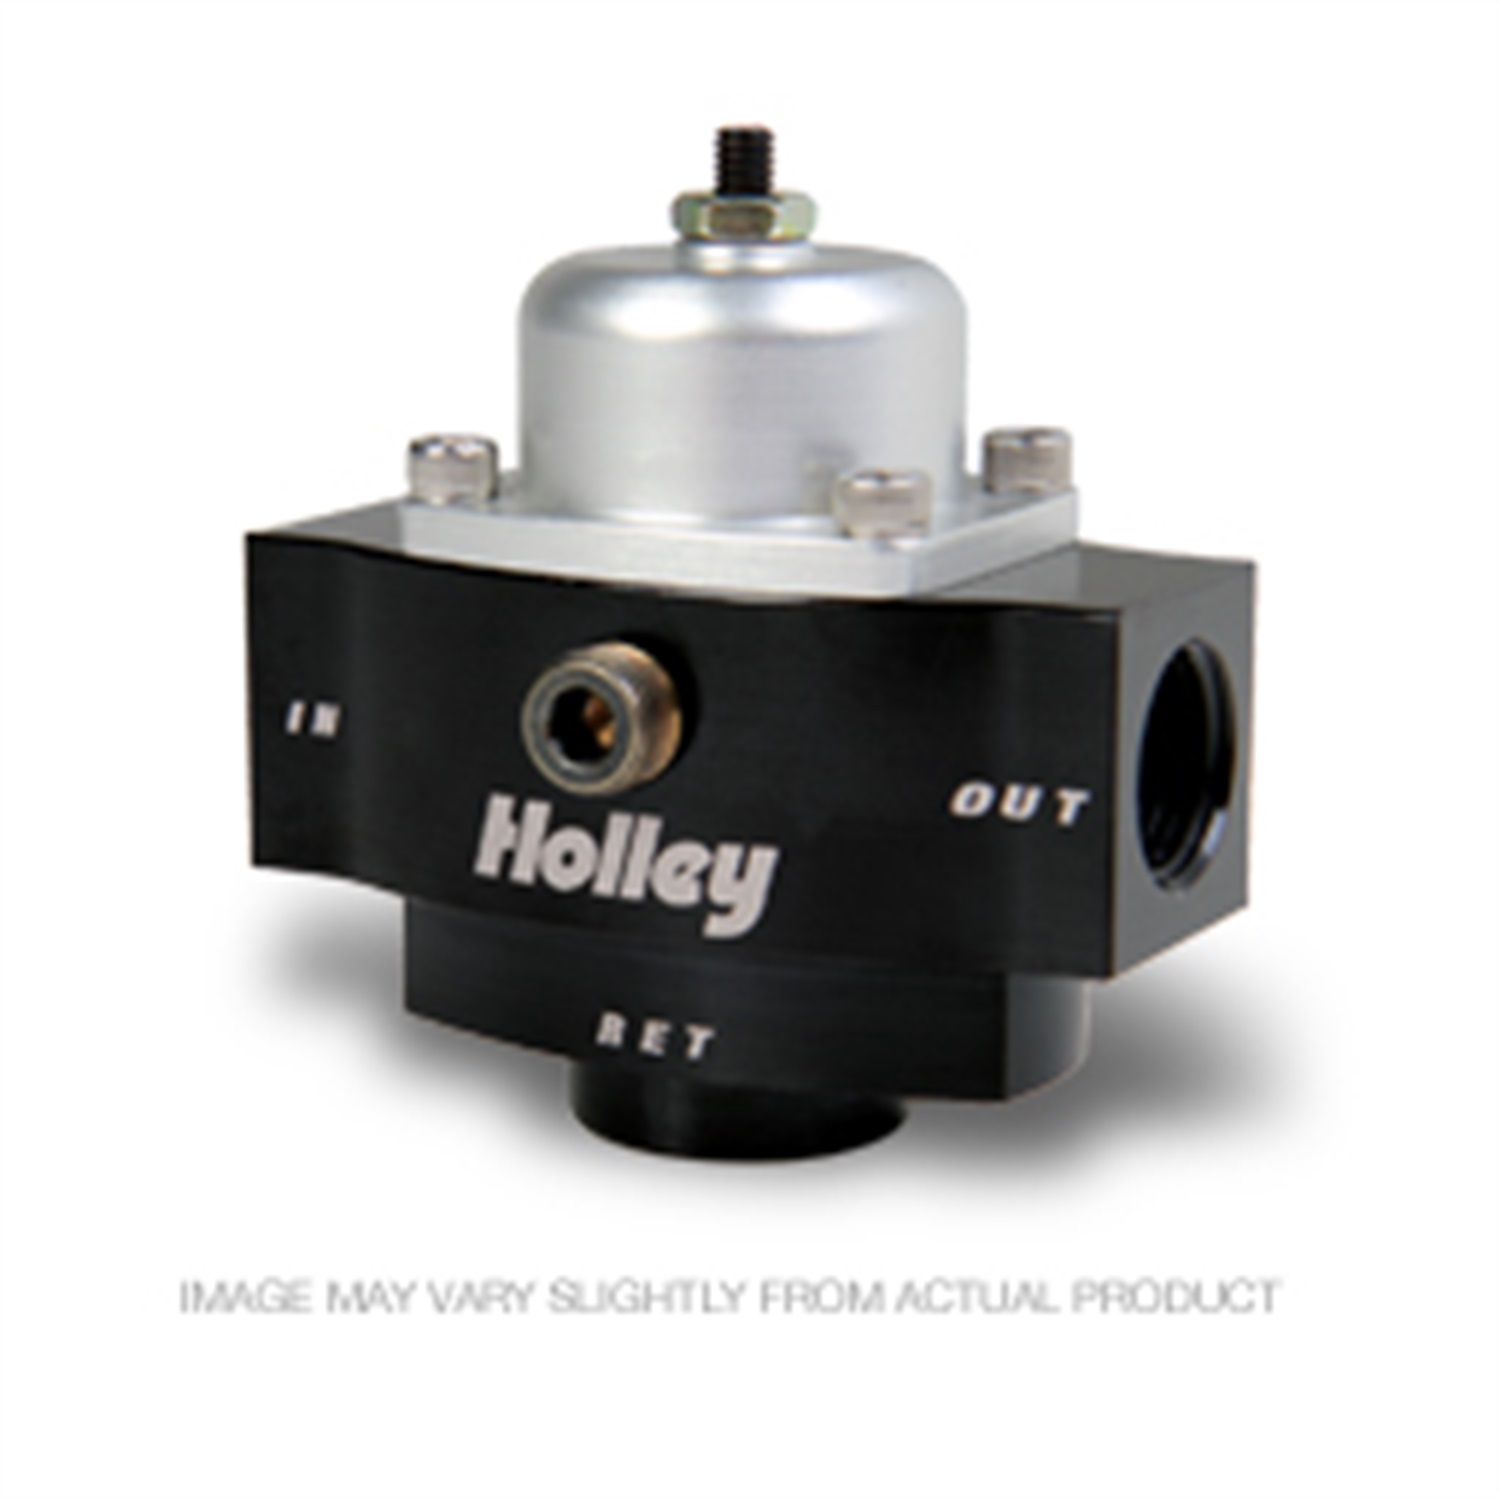 Holley Performance Holley Performance 12-842 HP Billet Fuel Pressure Regulator